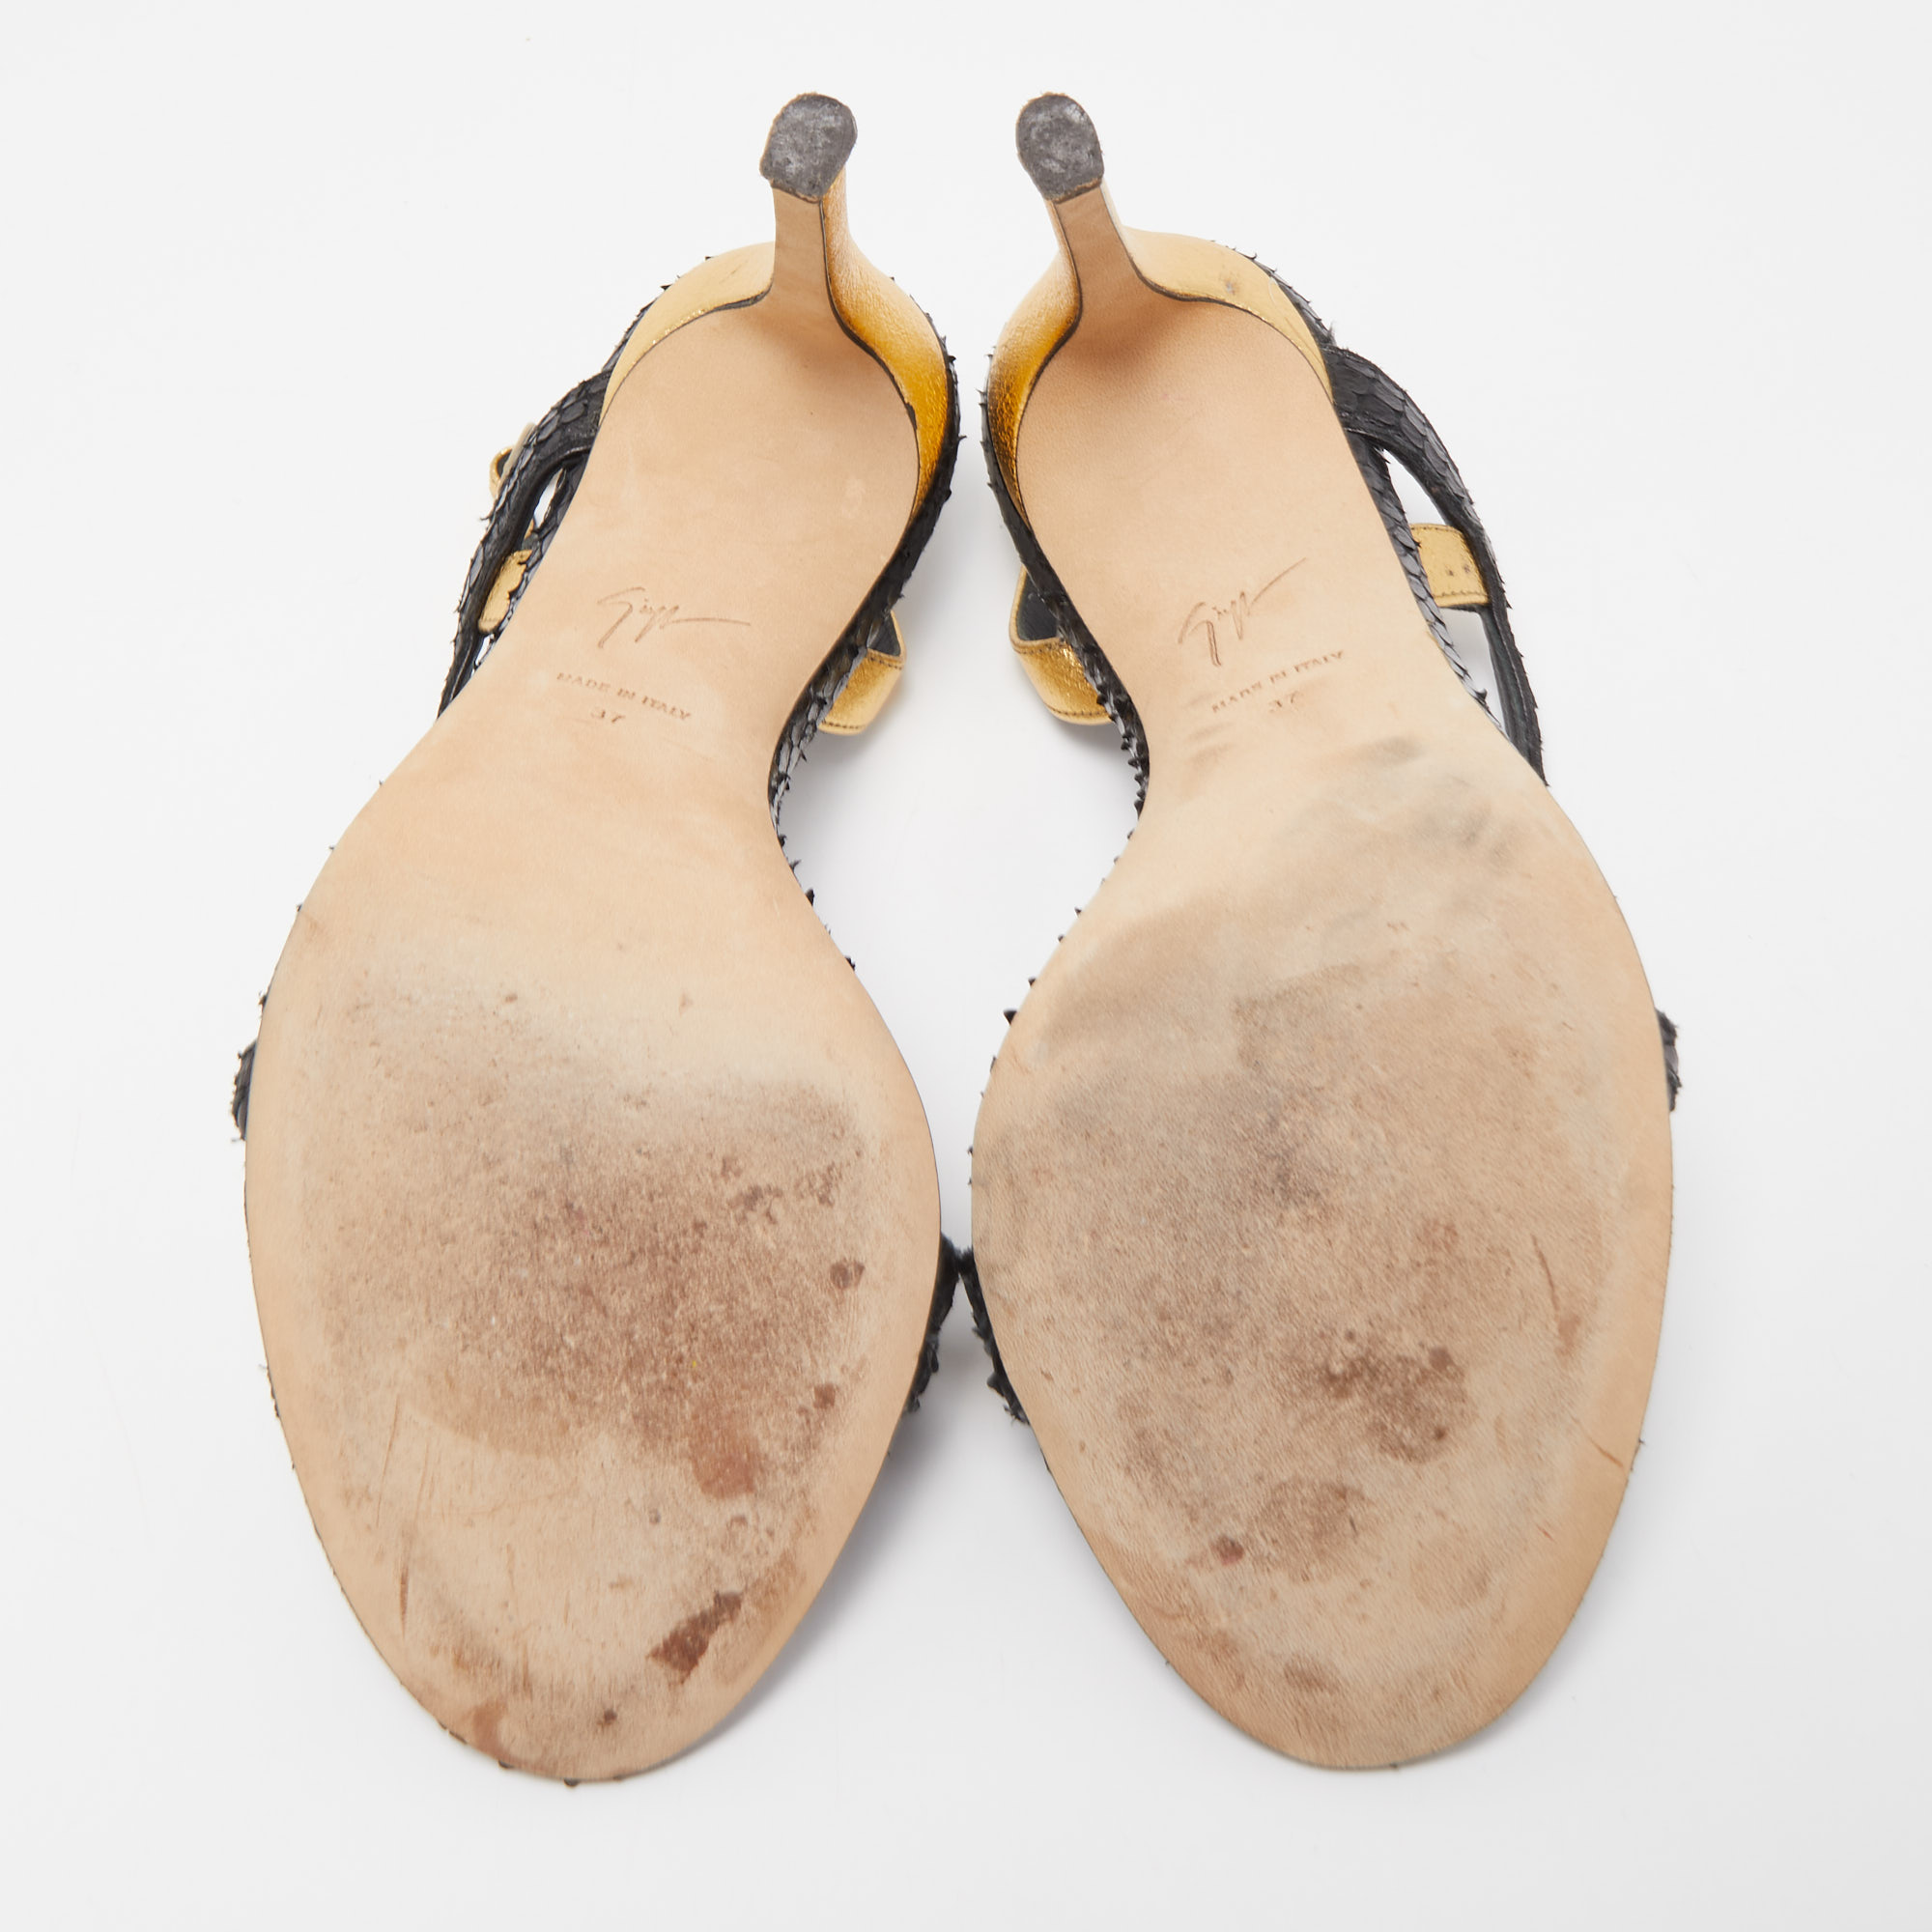 Giuseppe Zanotti Black/Gold Python Embossed And Leather Slingback Sandals Size 37